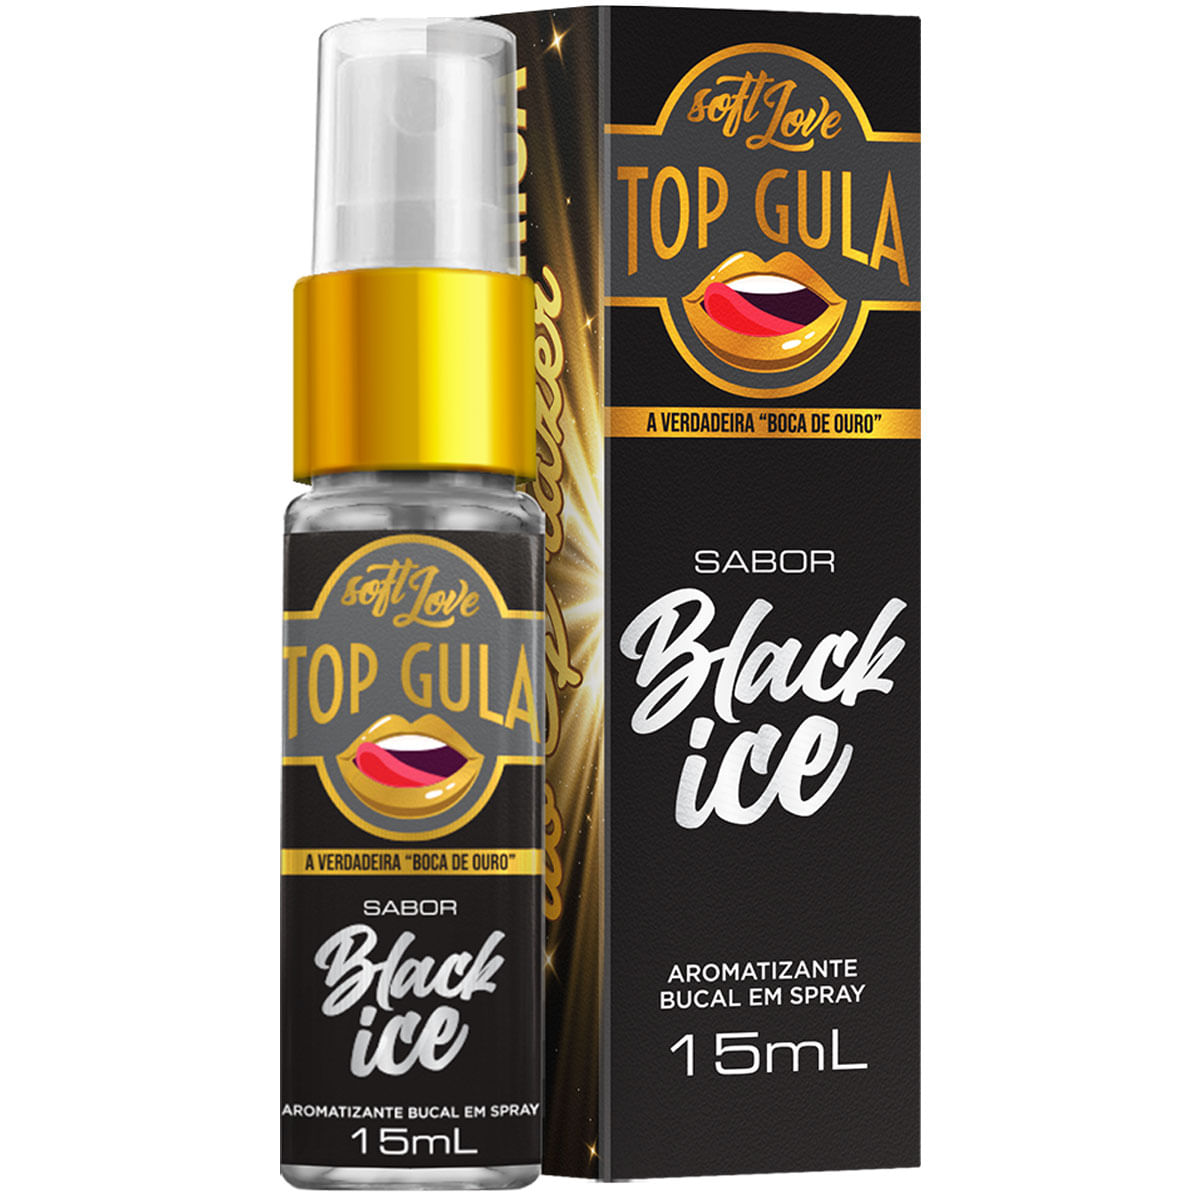 Top Gula Aromatizante Bucal Black Ice 15ml Soft Love